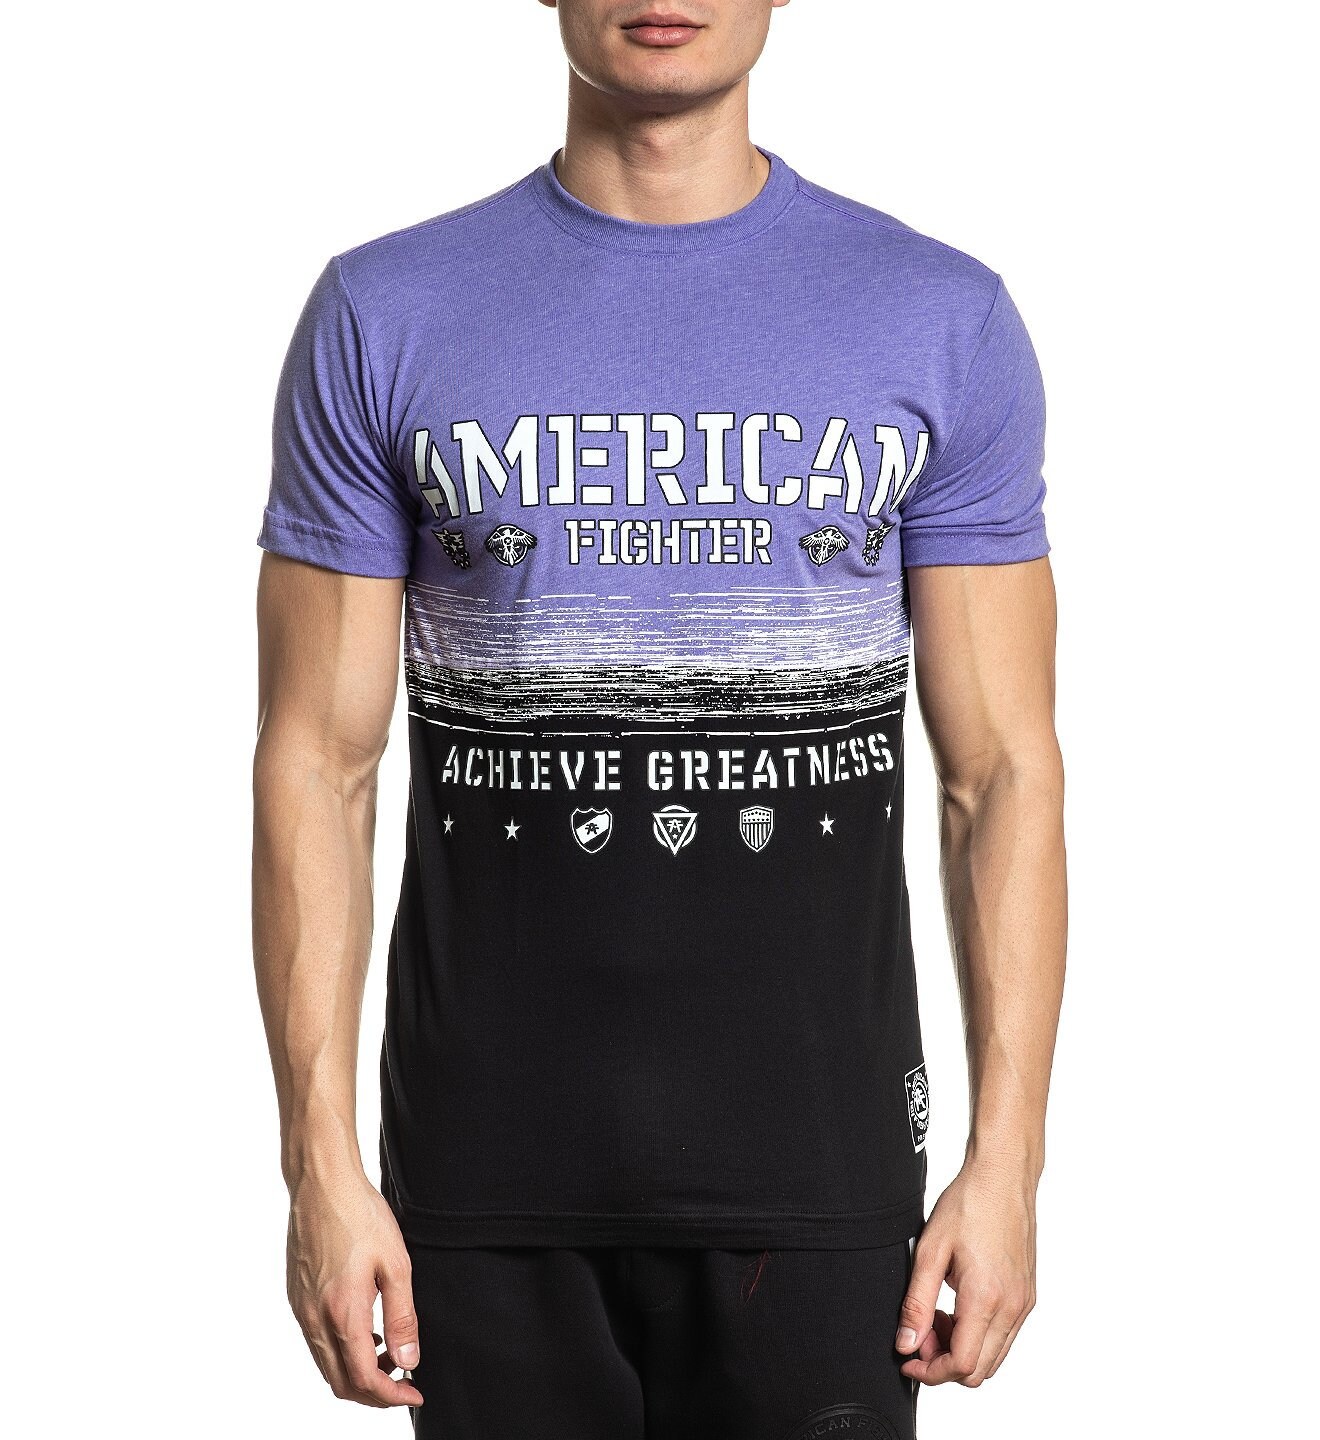 Discover AMERICAN FIGHTER GRANTON Men's T-Shirt S/S